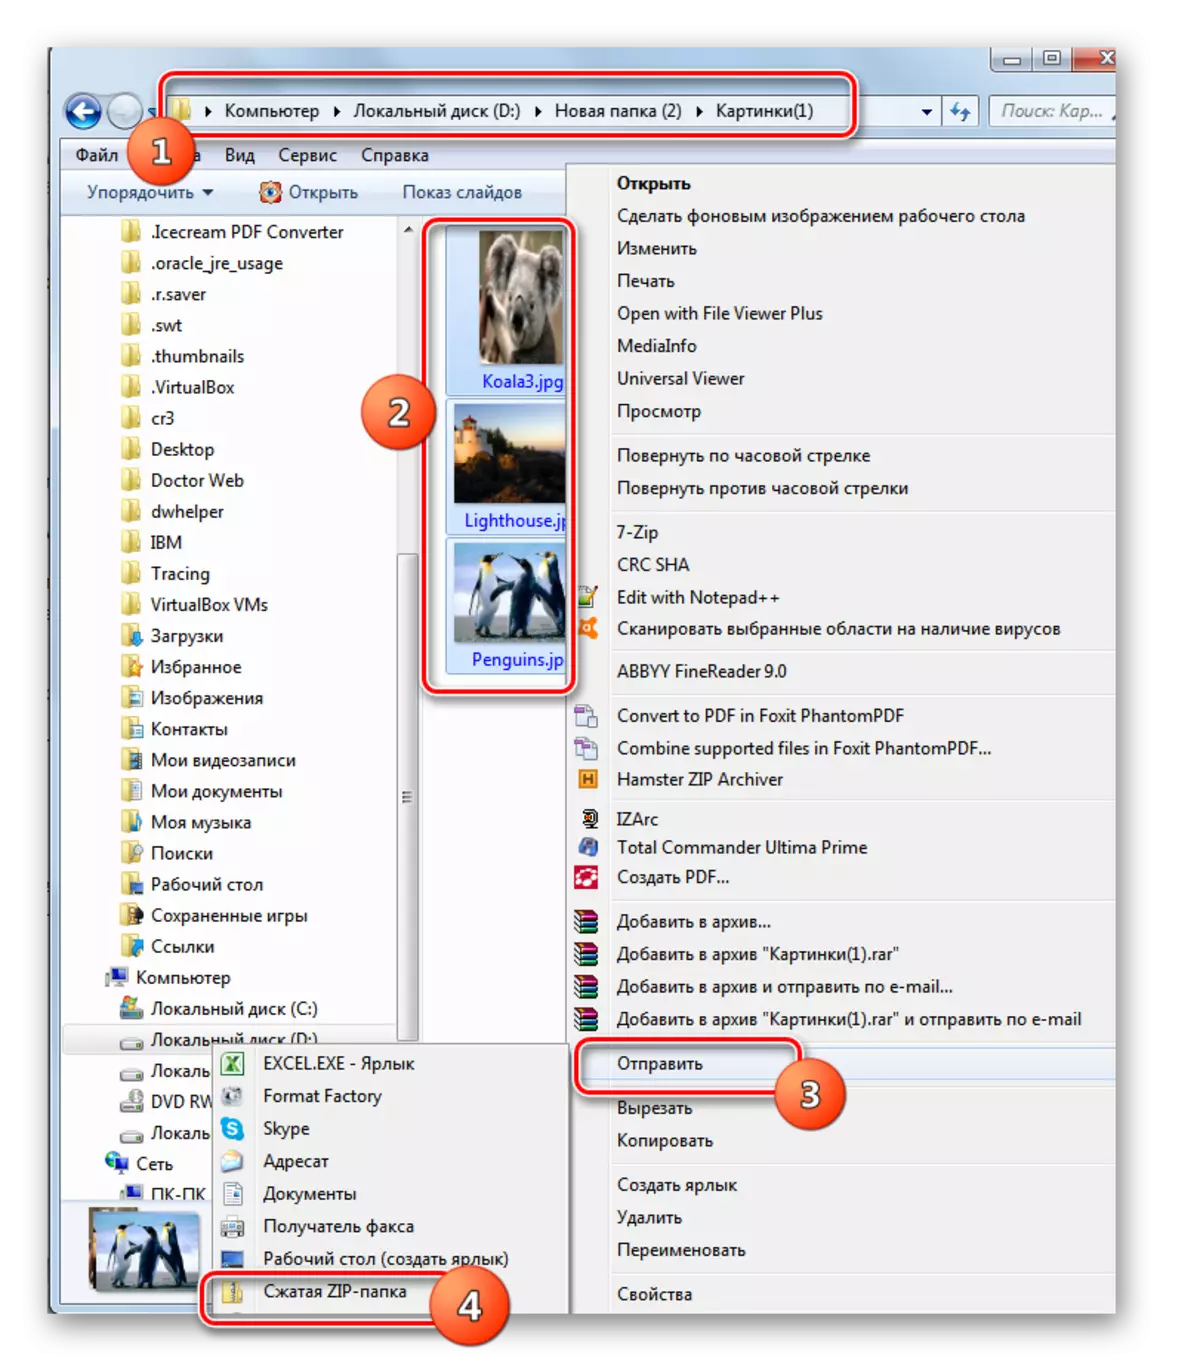 Windows 7 లో కండక్టర్ యొక్క సందర్భ మెను ద్వారా ఒక జిప్ ఆర్కైవ్ను సృష్టించడం